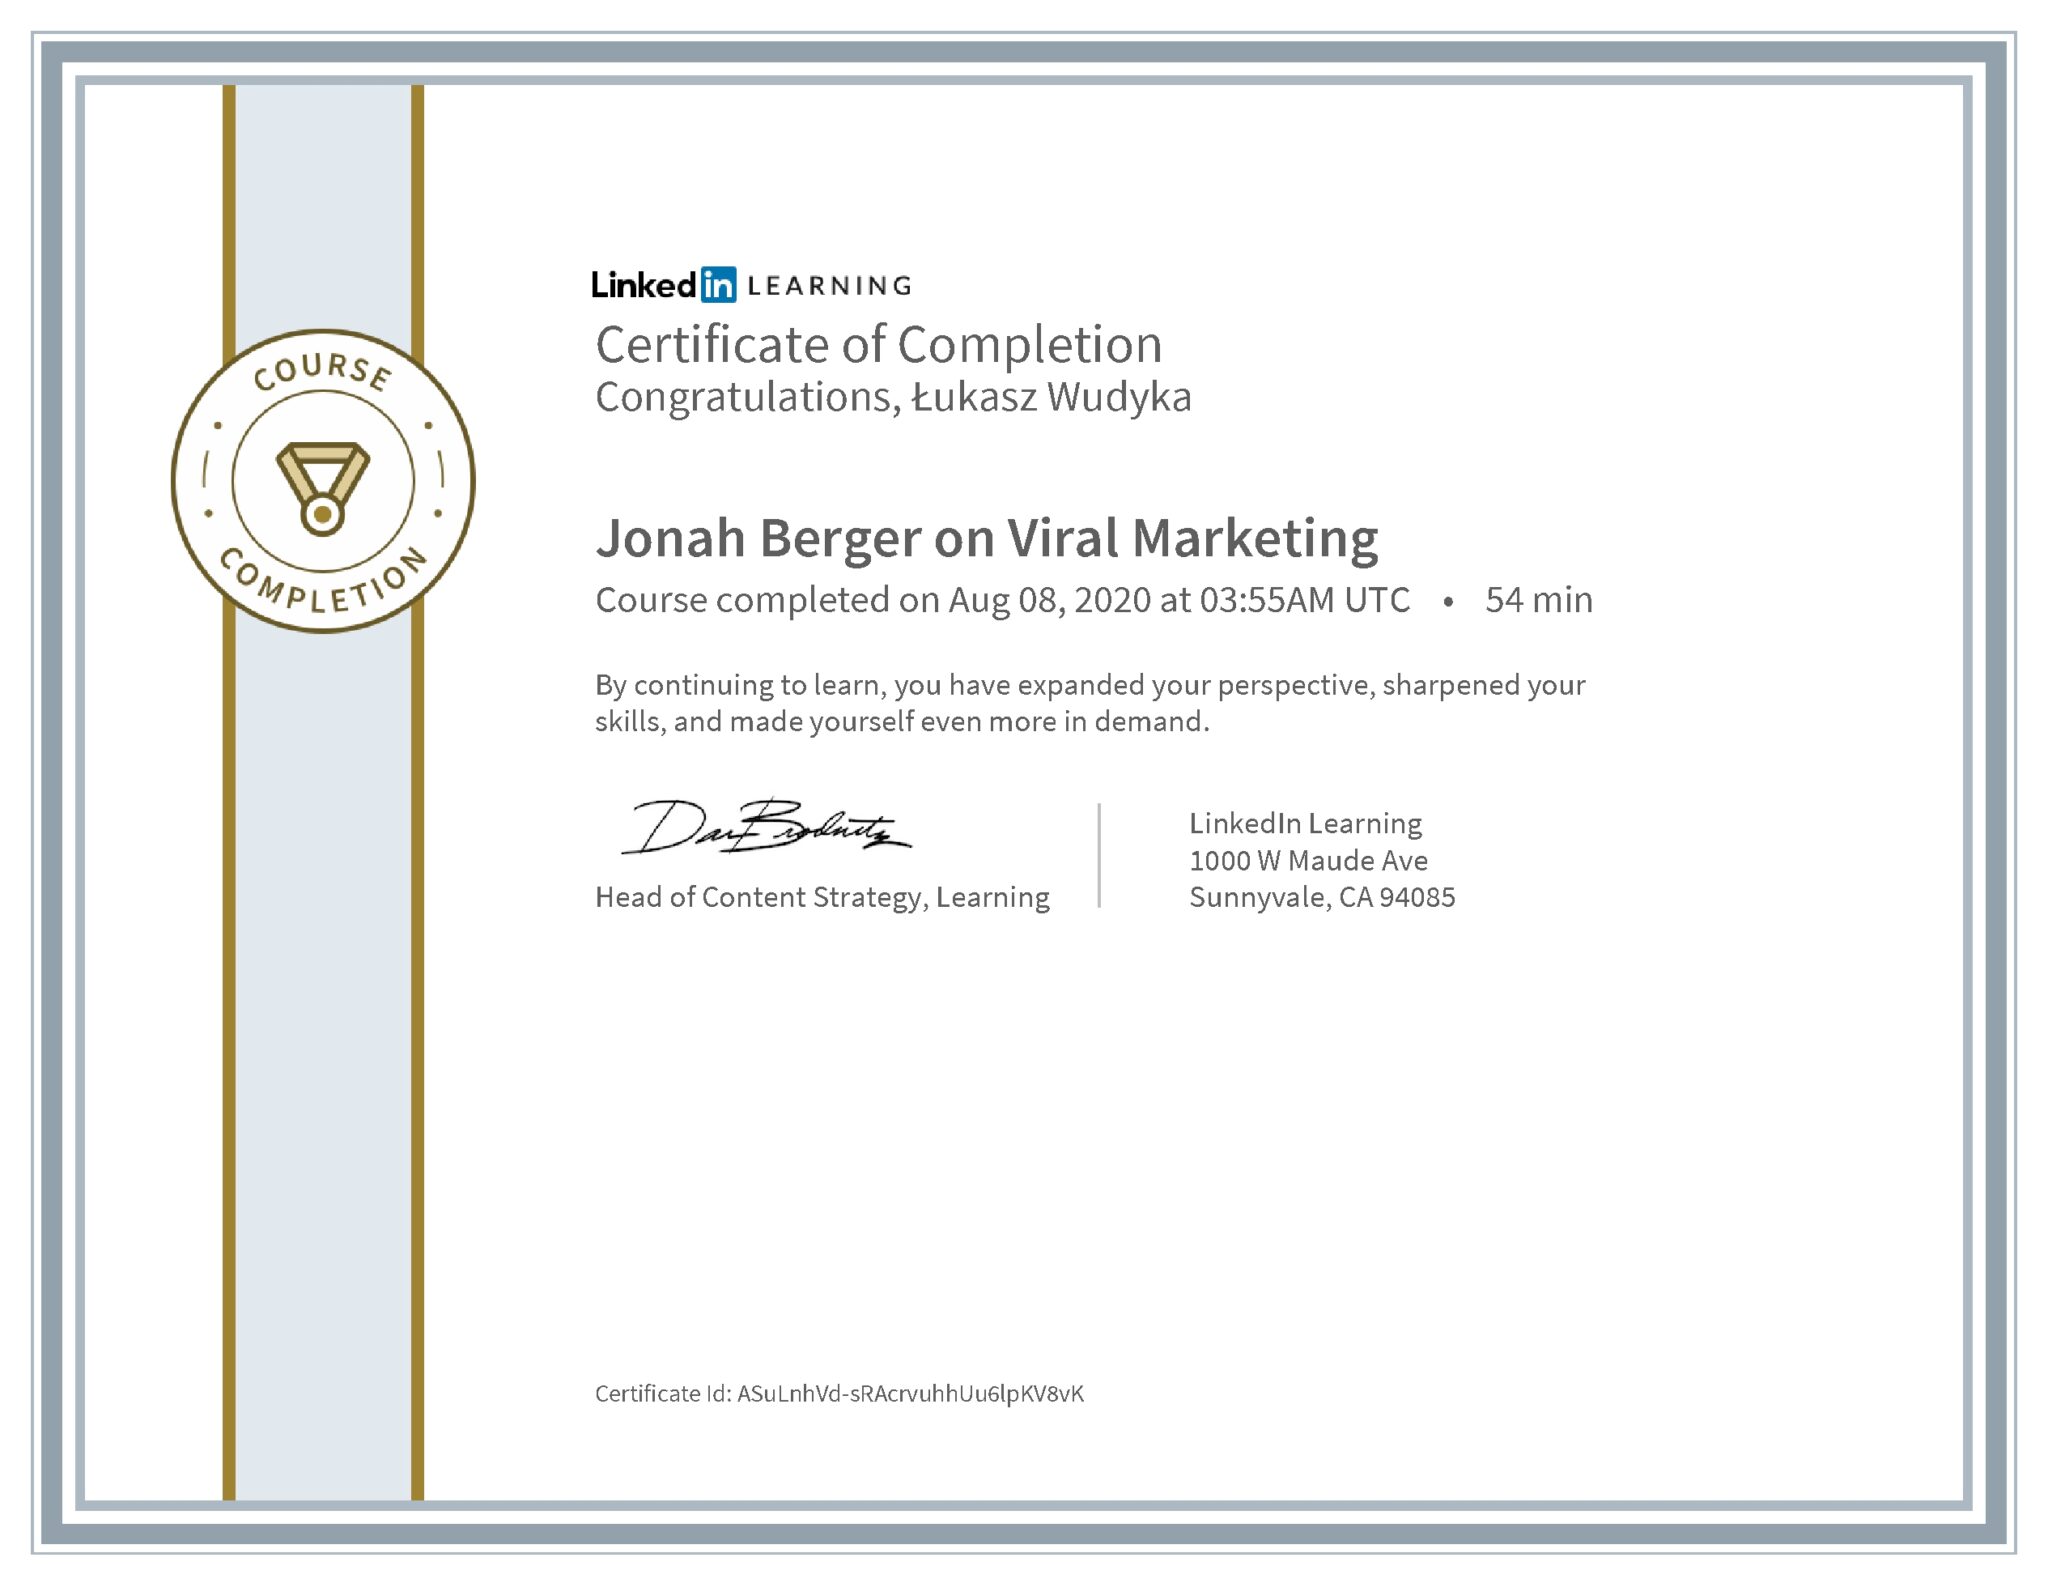 Łukasz Wudyka certyfikat LinkedIn Jonah Berger on Viral Marketing